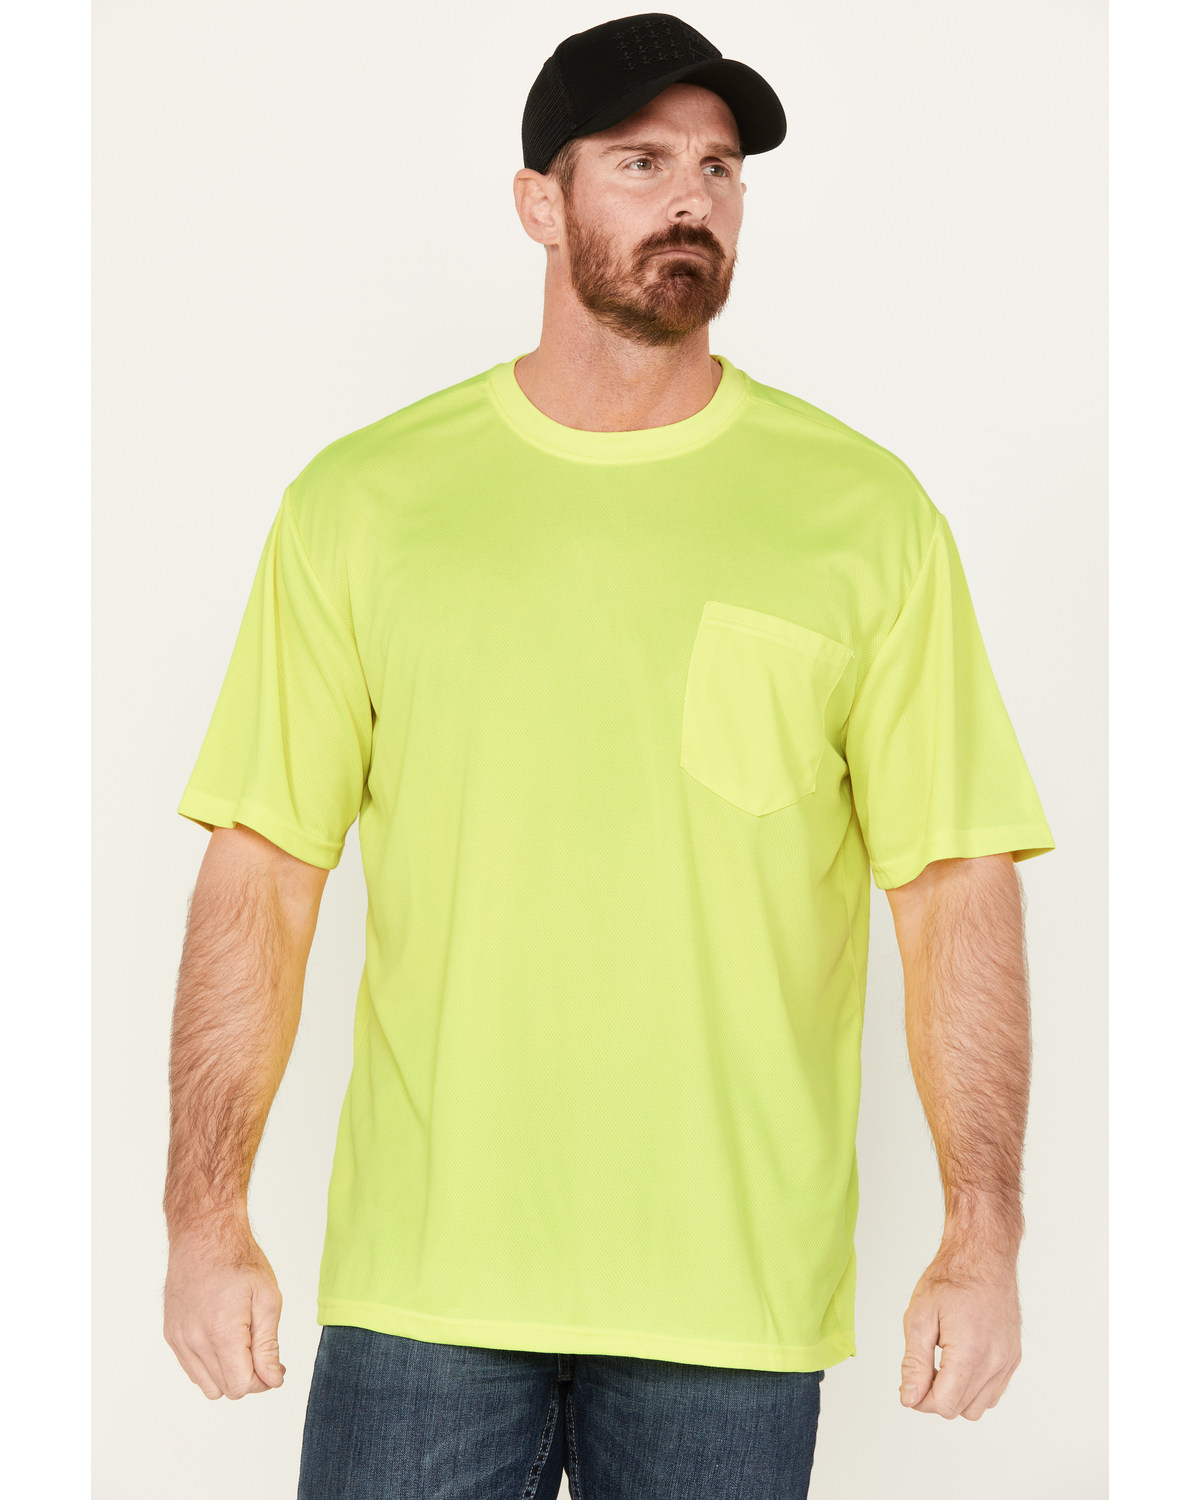 Hawx Men's High-Visibility Short Sleeve Work Shirt